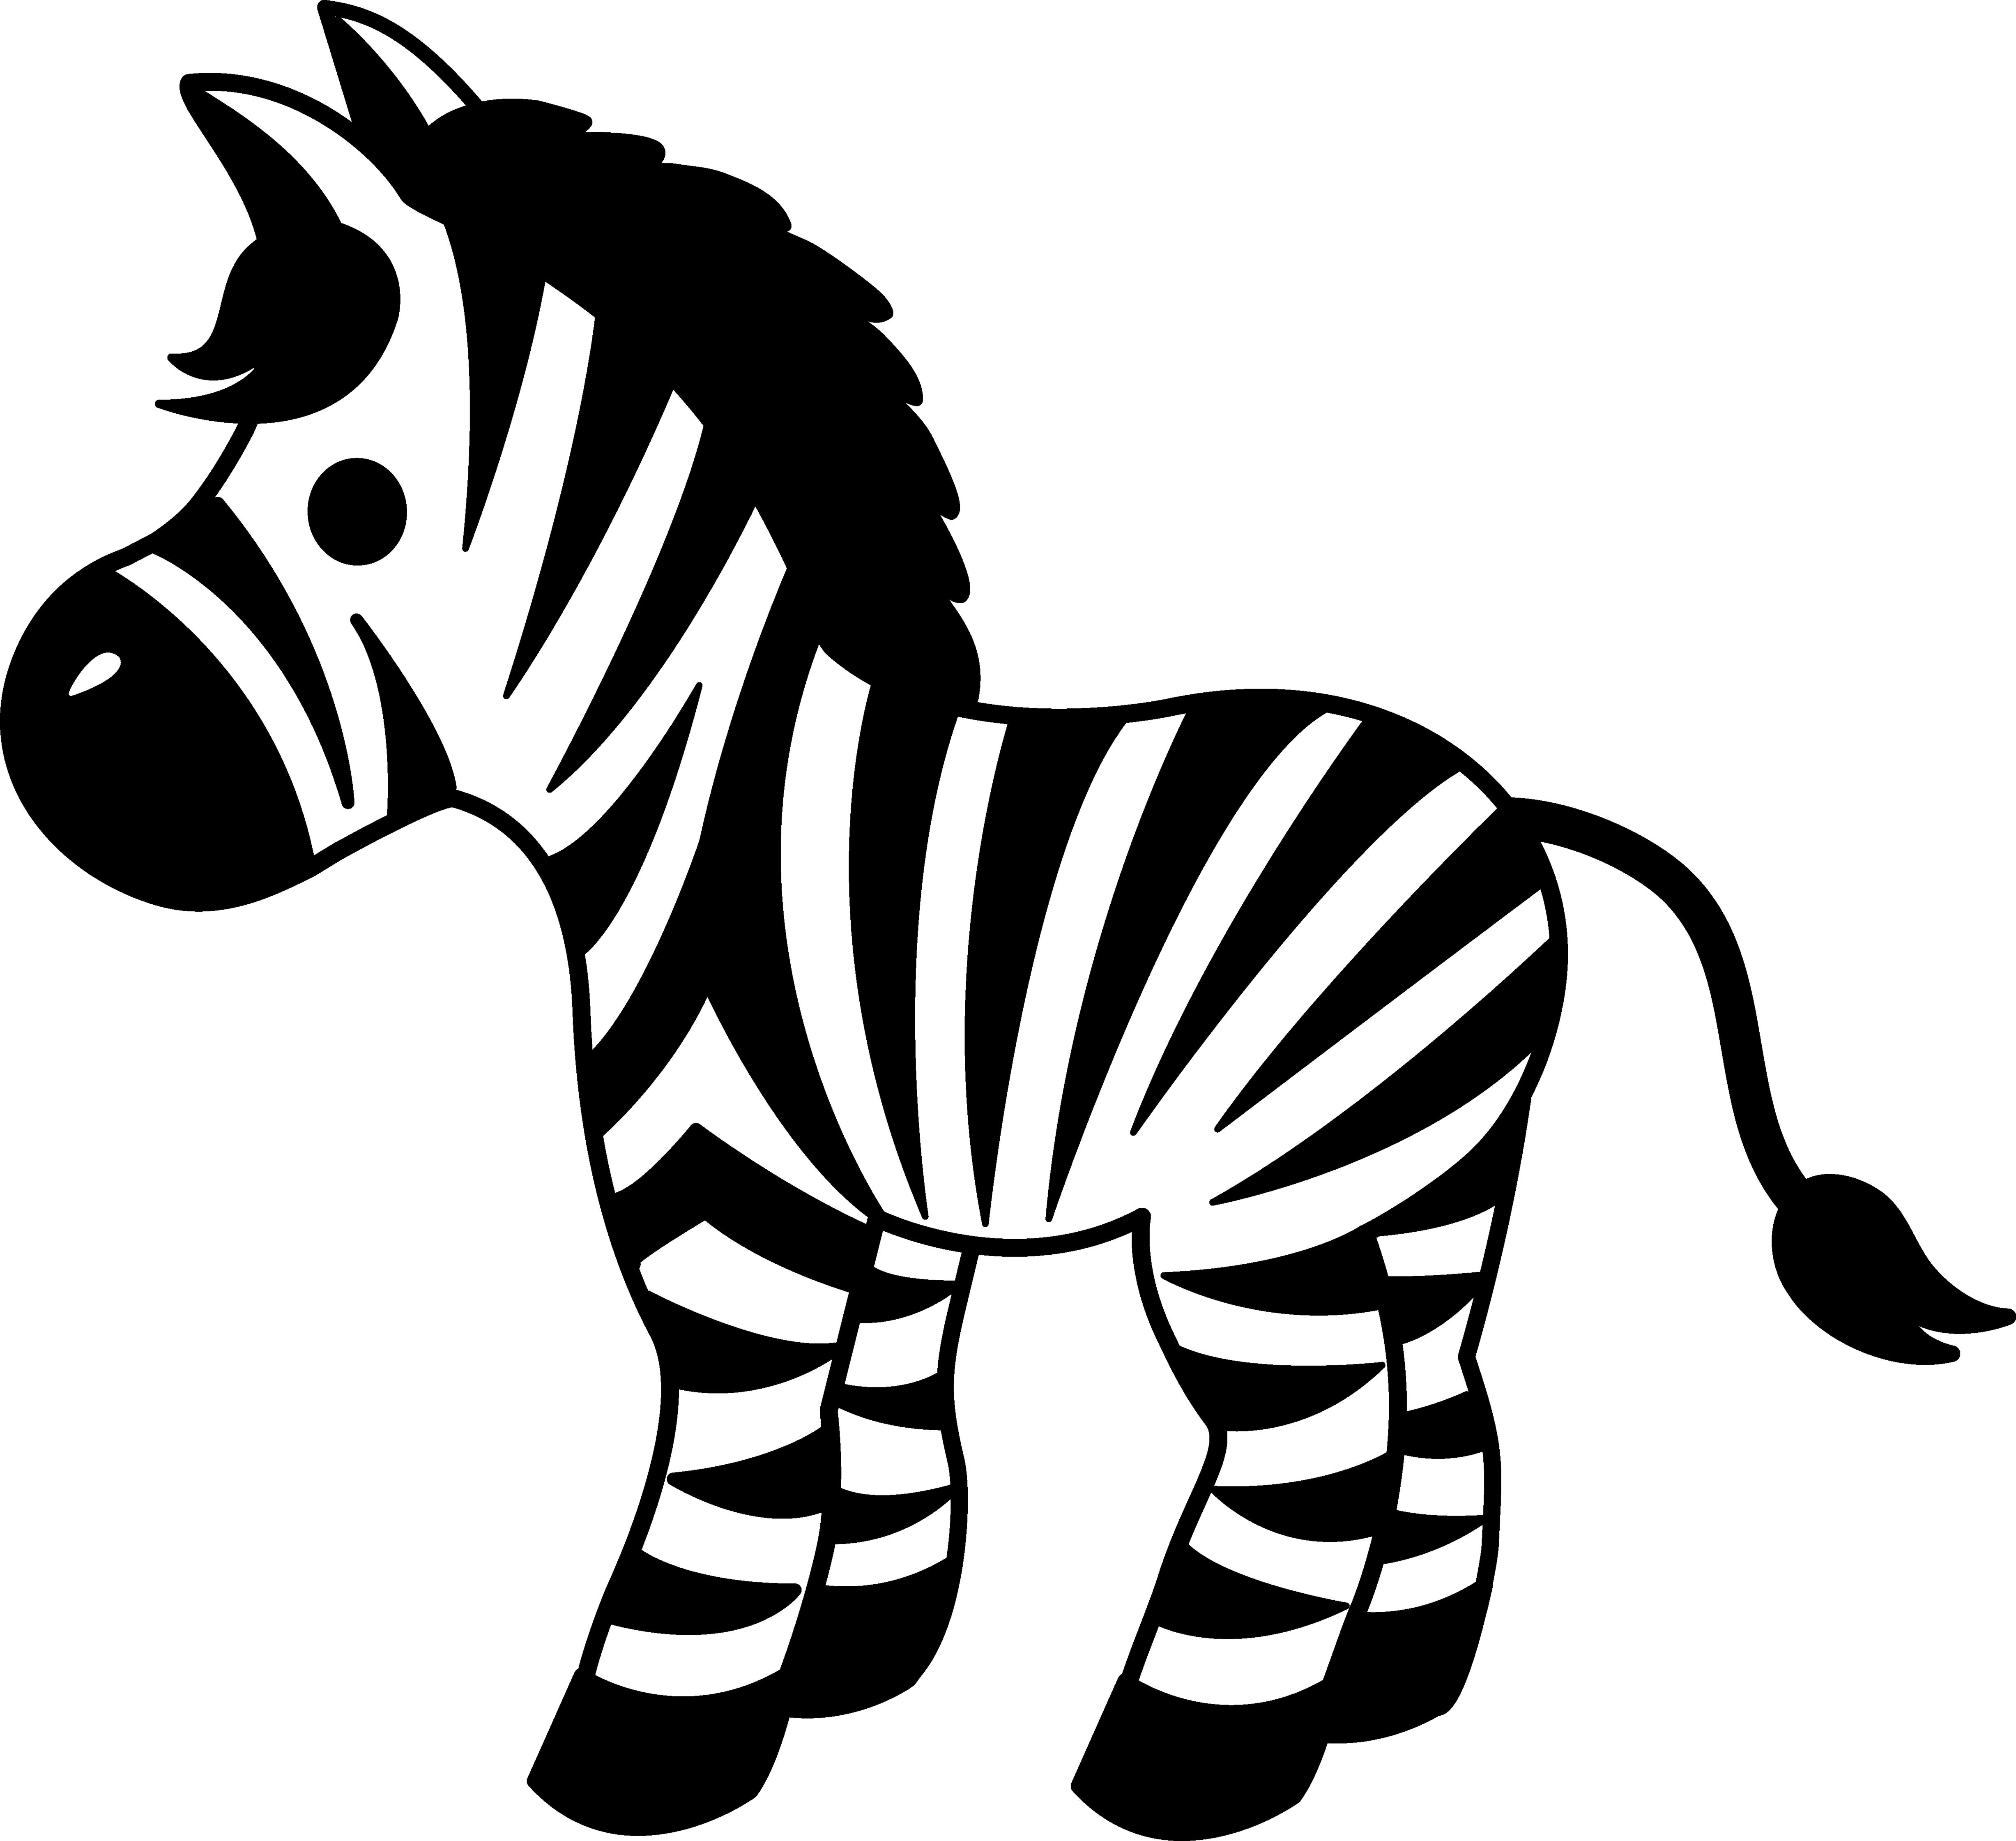 Zebra iphone clipart - ClipartFox